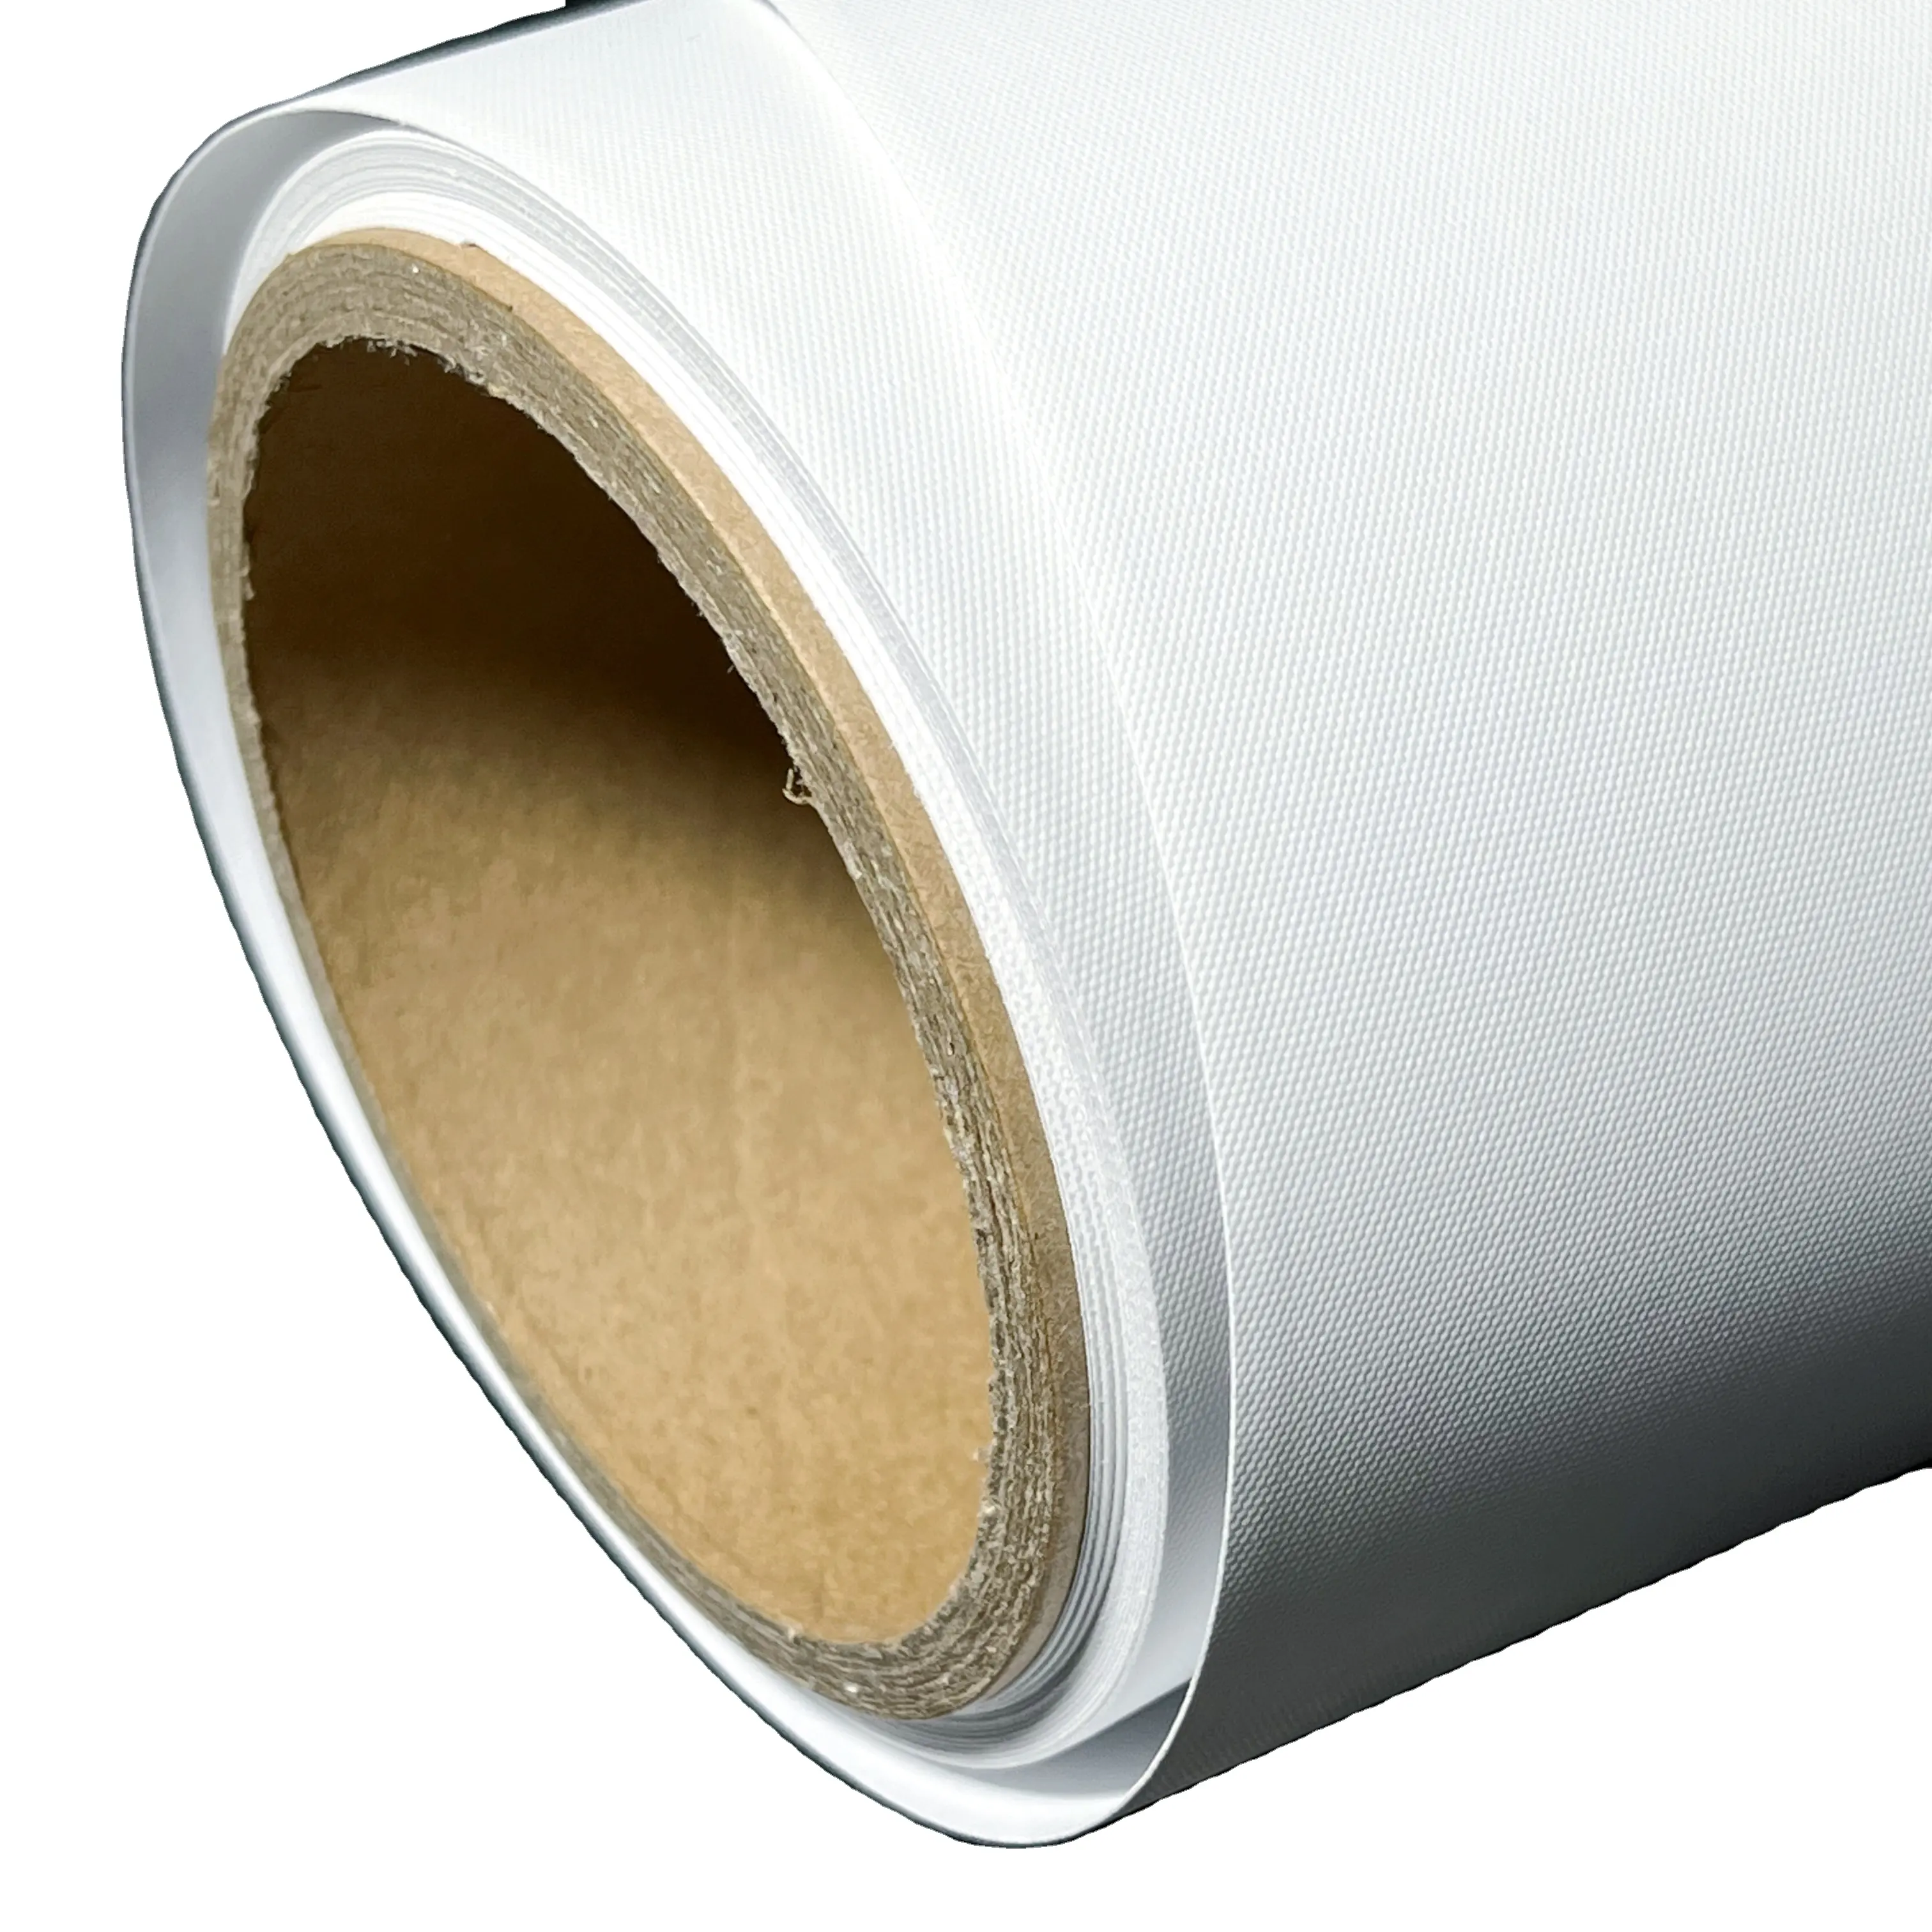 Papel tapiz autoadhesivo reposicionable para interiores, color blanco, para imprimir